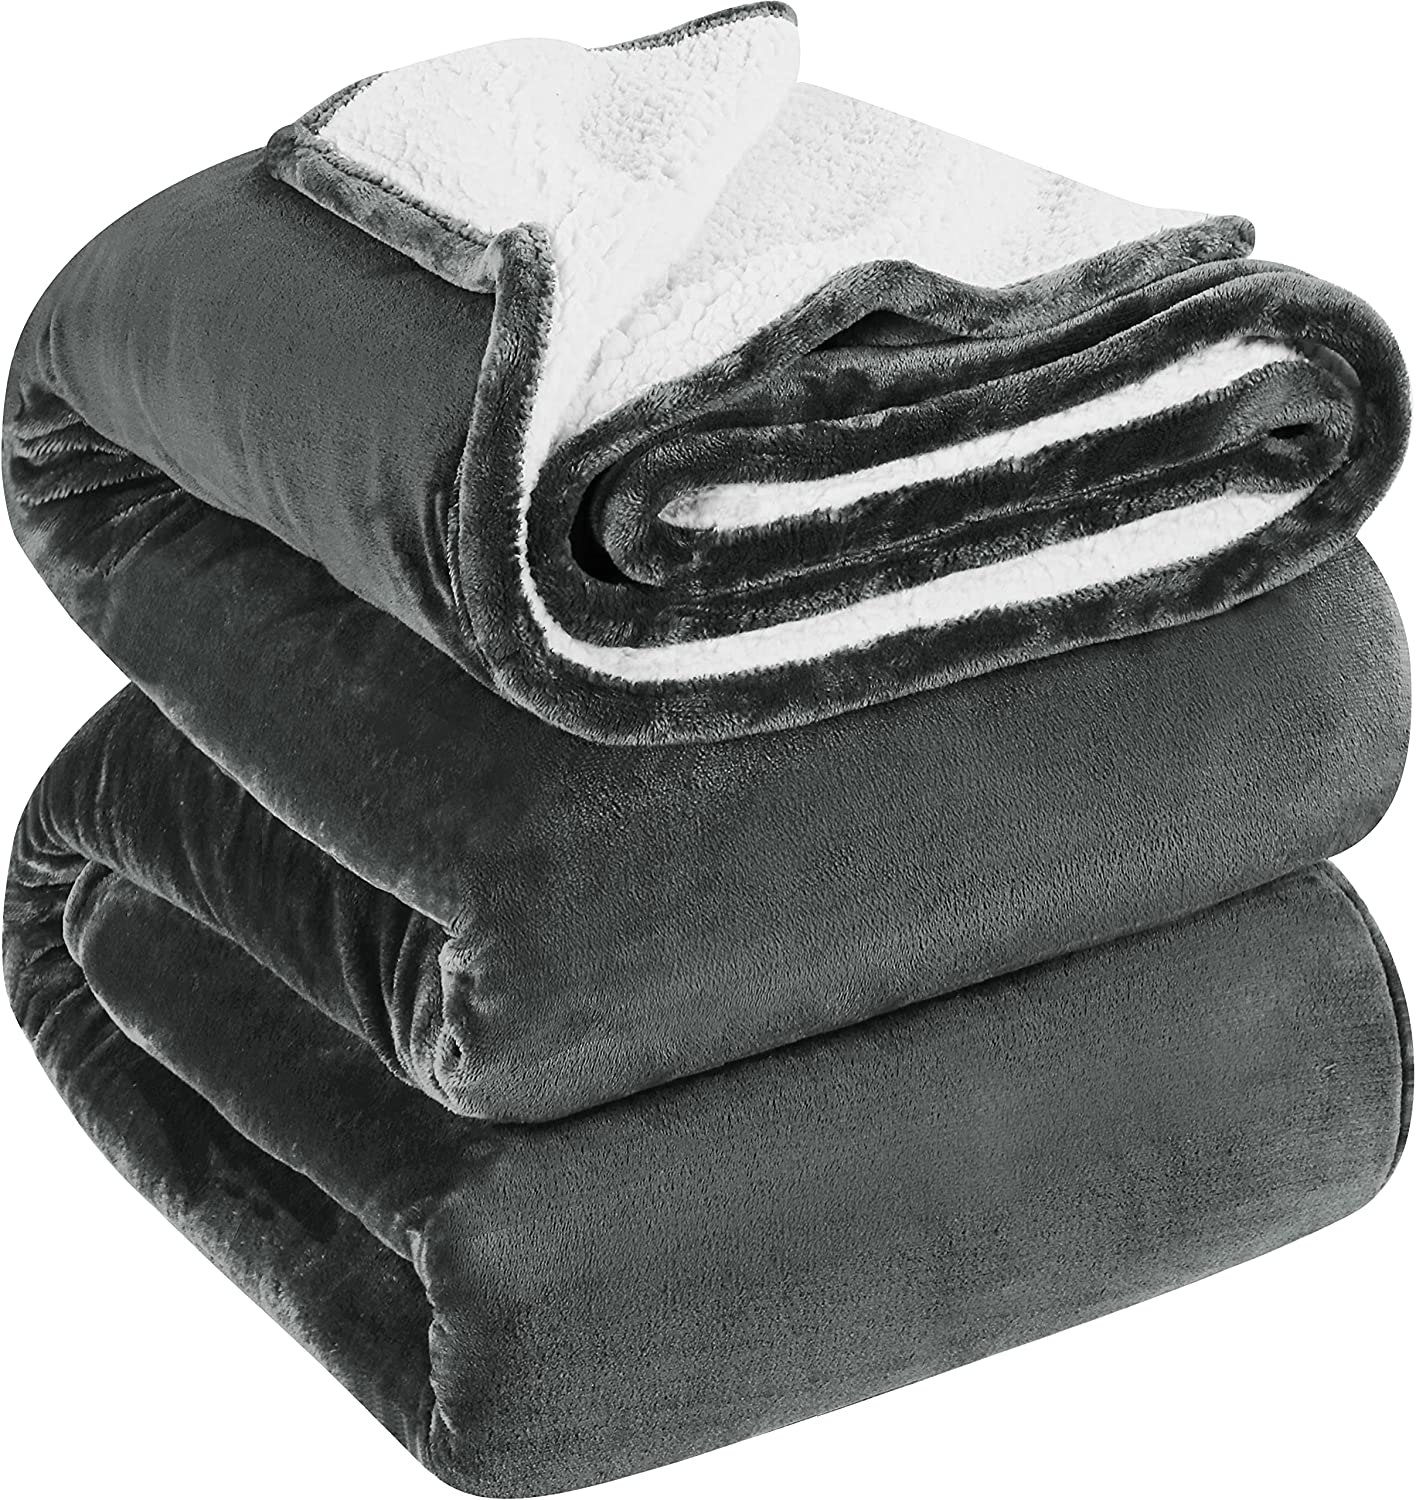 Utopia Bedding Sherpa Blanket Queen Size [Black, 90x90 Inches